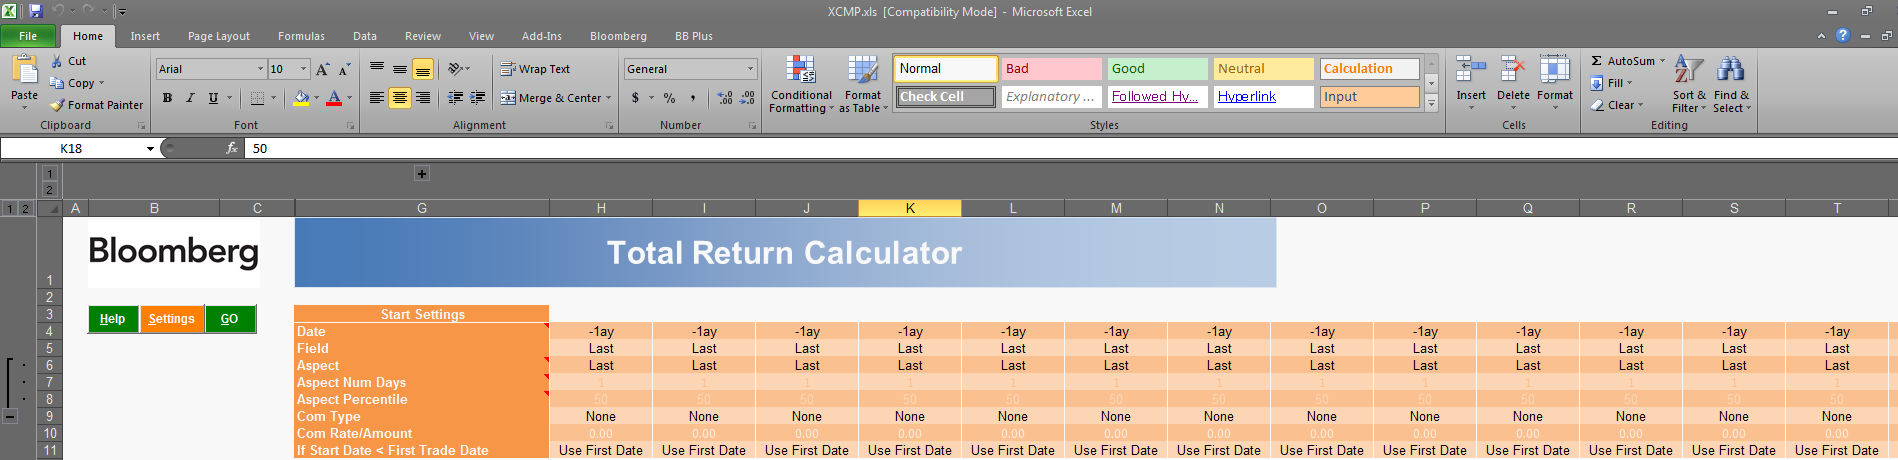 Excel 2011 fur mac free download windows 10